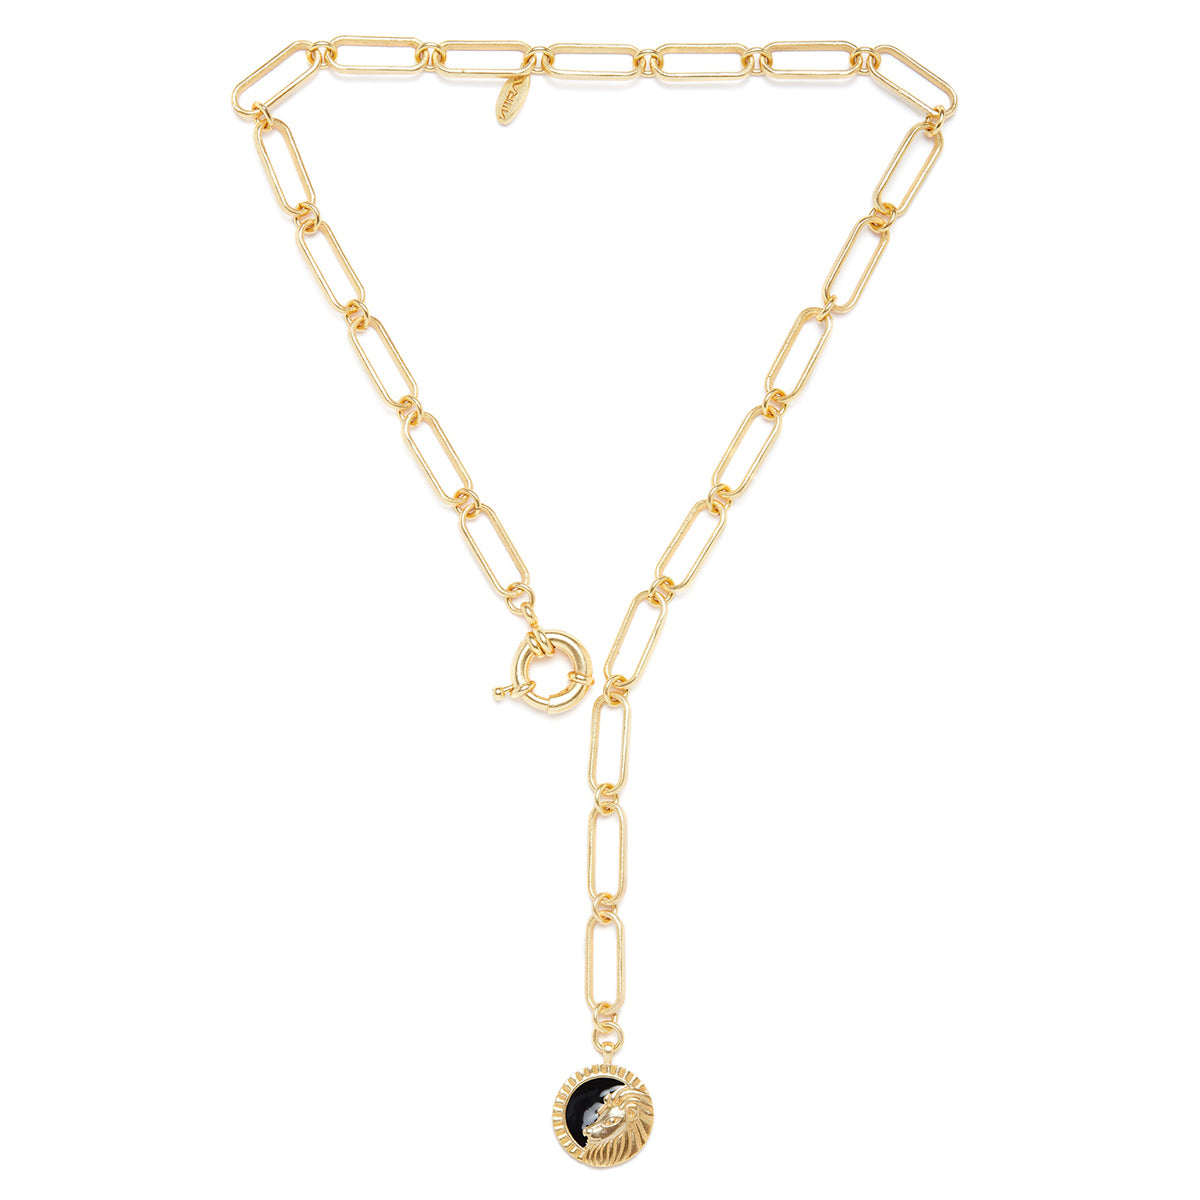 Buy Gold Toned Handcrafted Brass Leo Necklace | PERJBRNKNOV72/JBR16NOV |  The loom